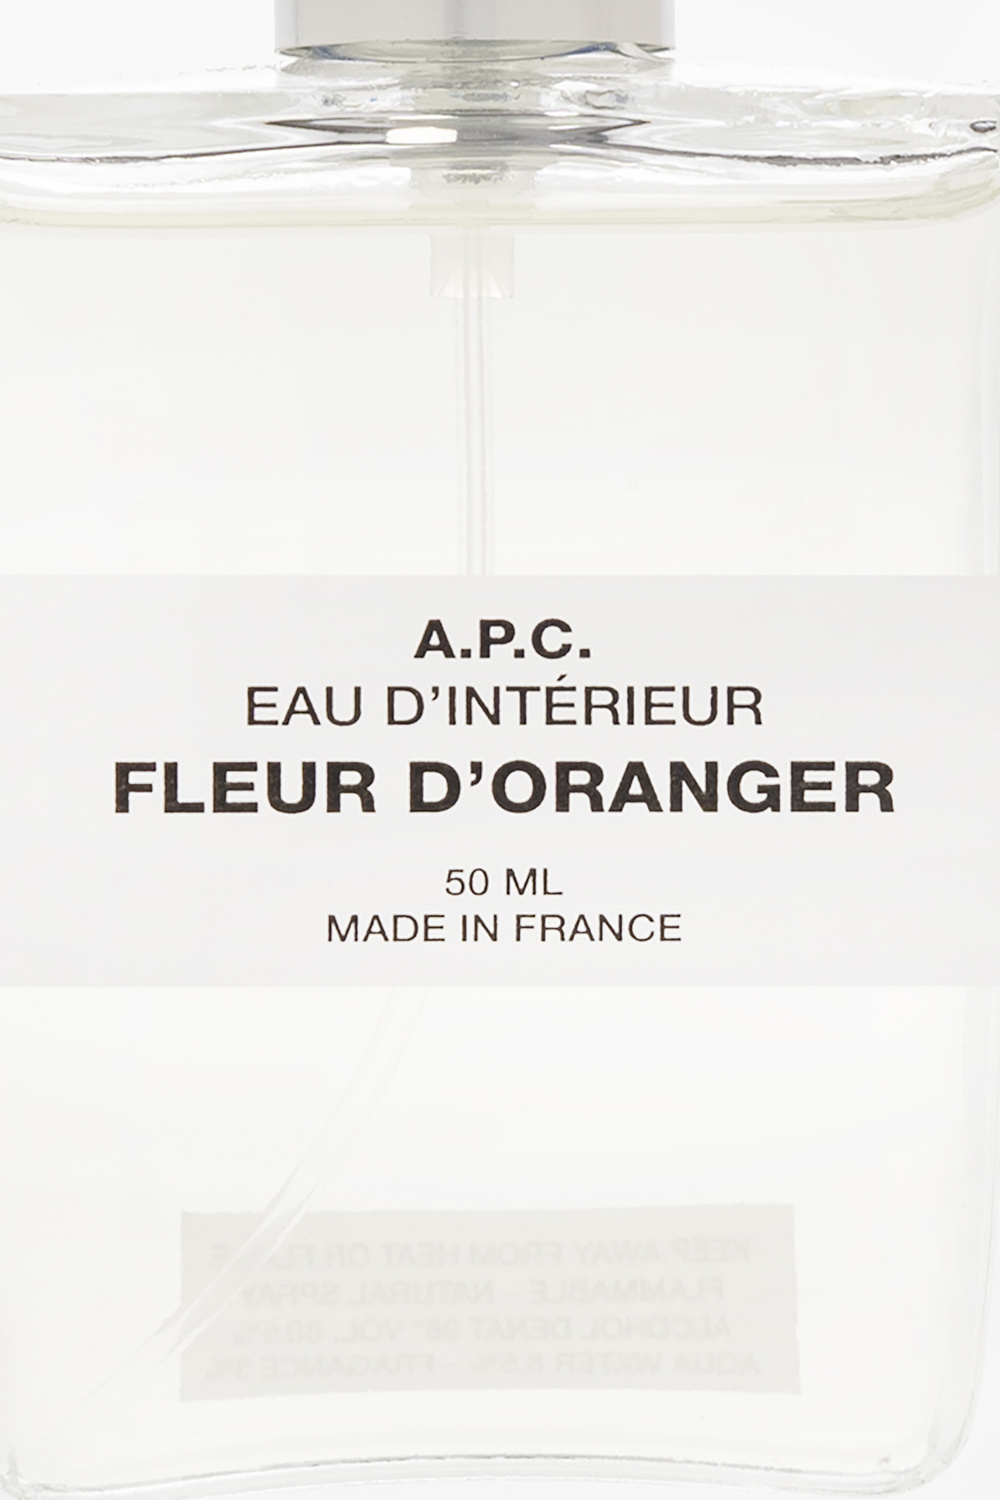 A.P.C. ‘Fleur d'Oranger’ room fragrance